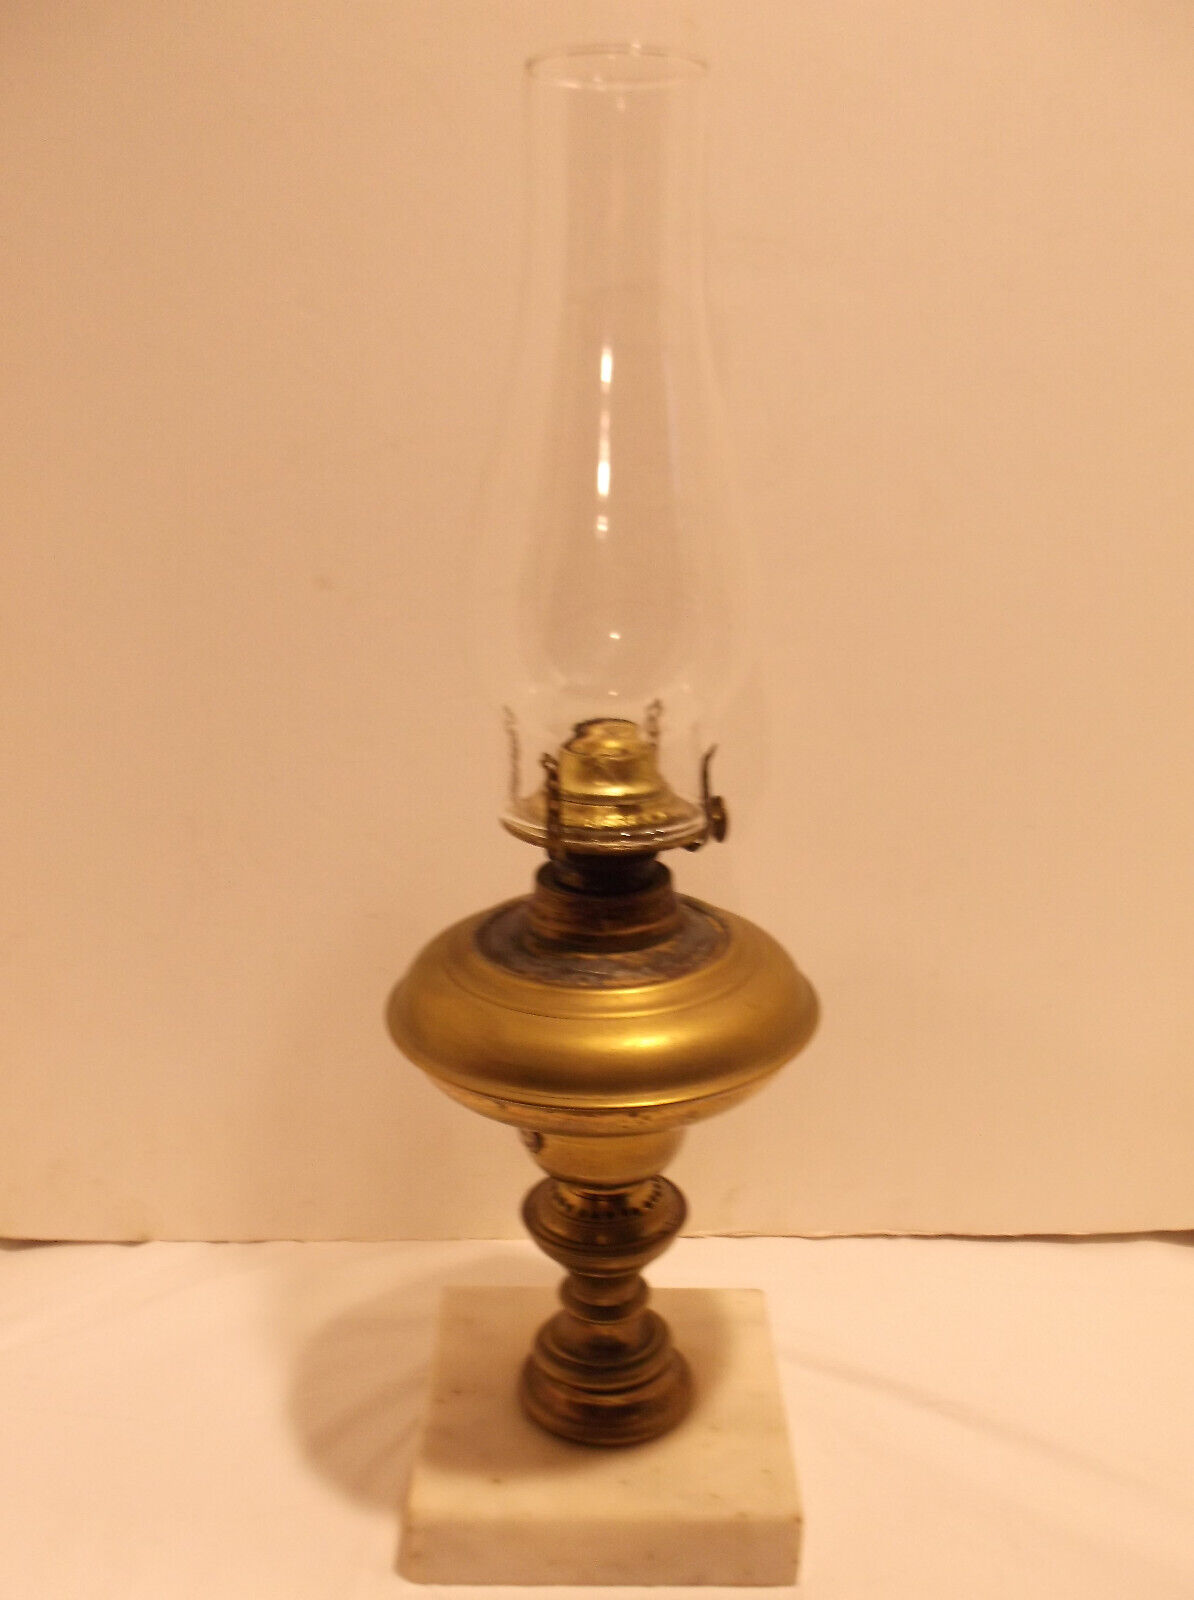 ANTIQUE CORNELIUS & CO Brass Oil Lamp W/Marble base Patented 1849 pre-civil war